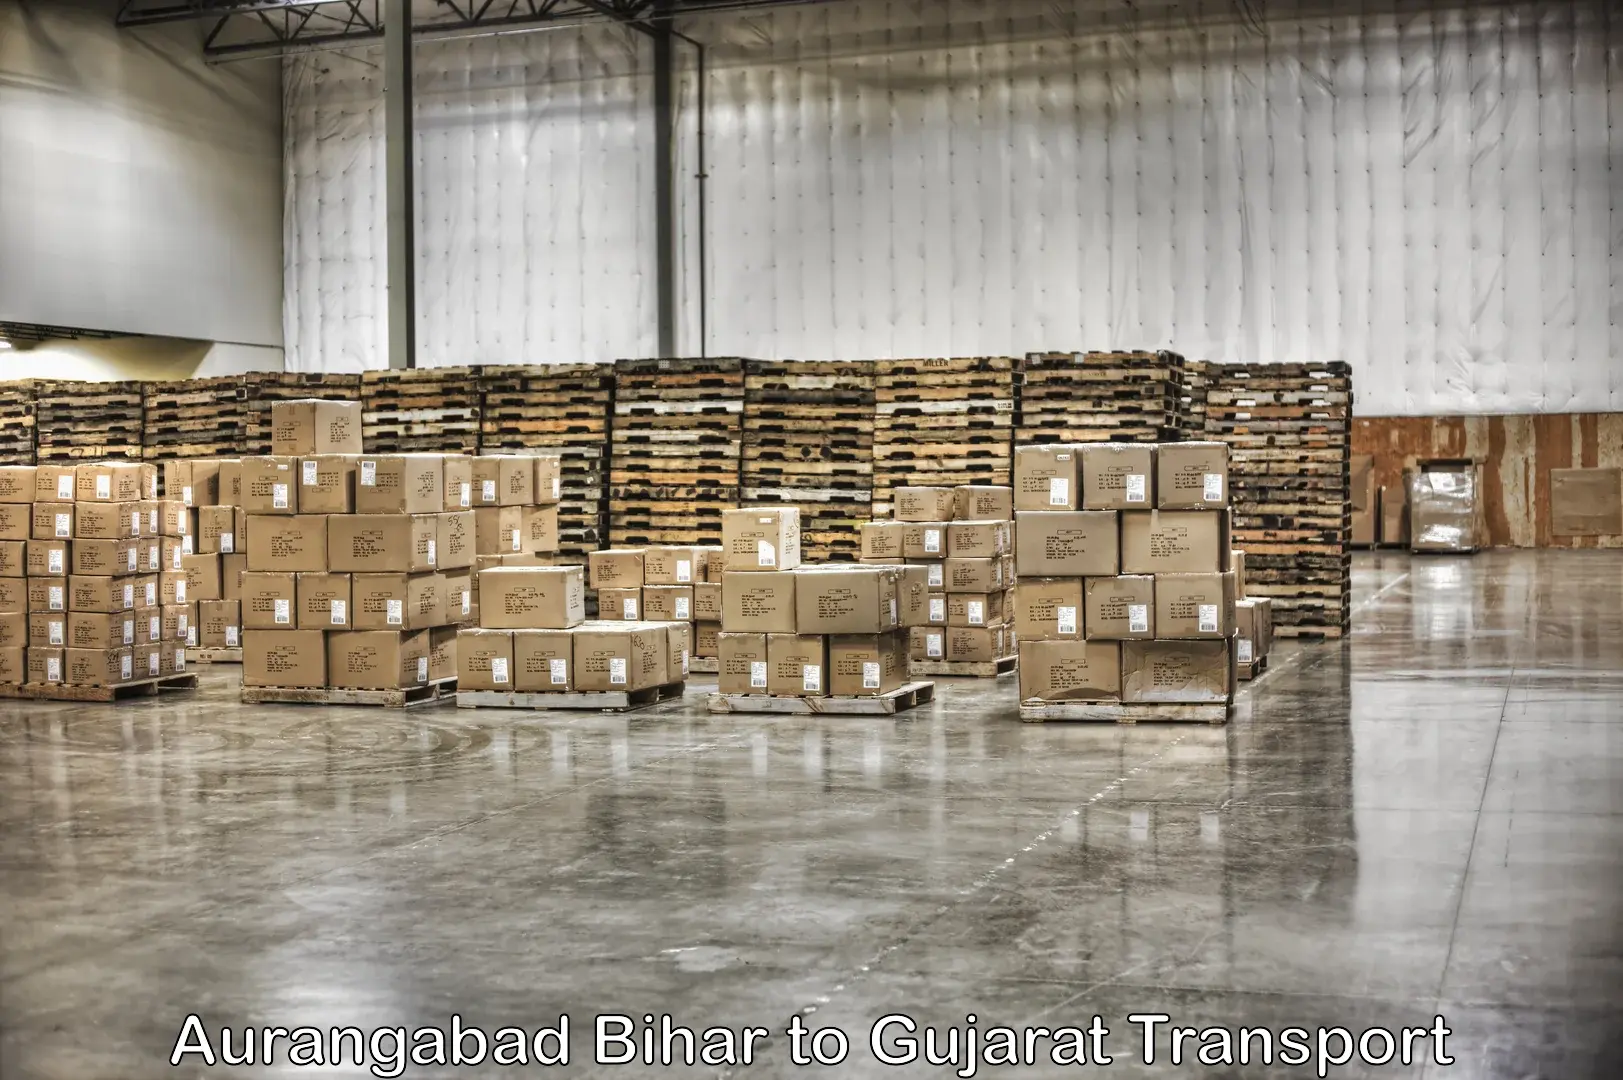 Truck transport companies in India Aurangabad Bihar to Valsad